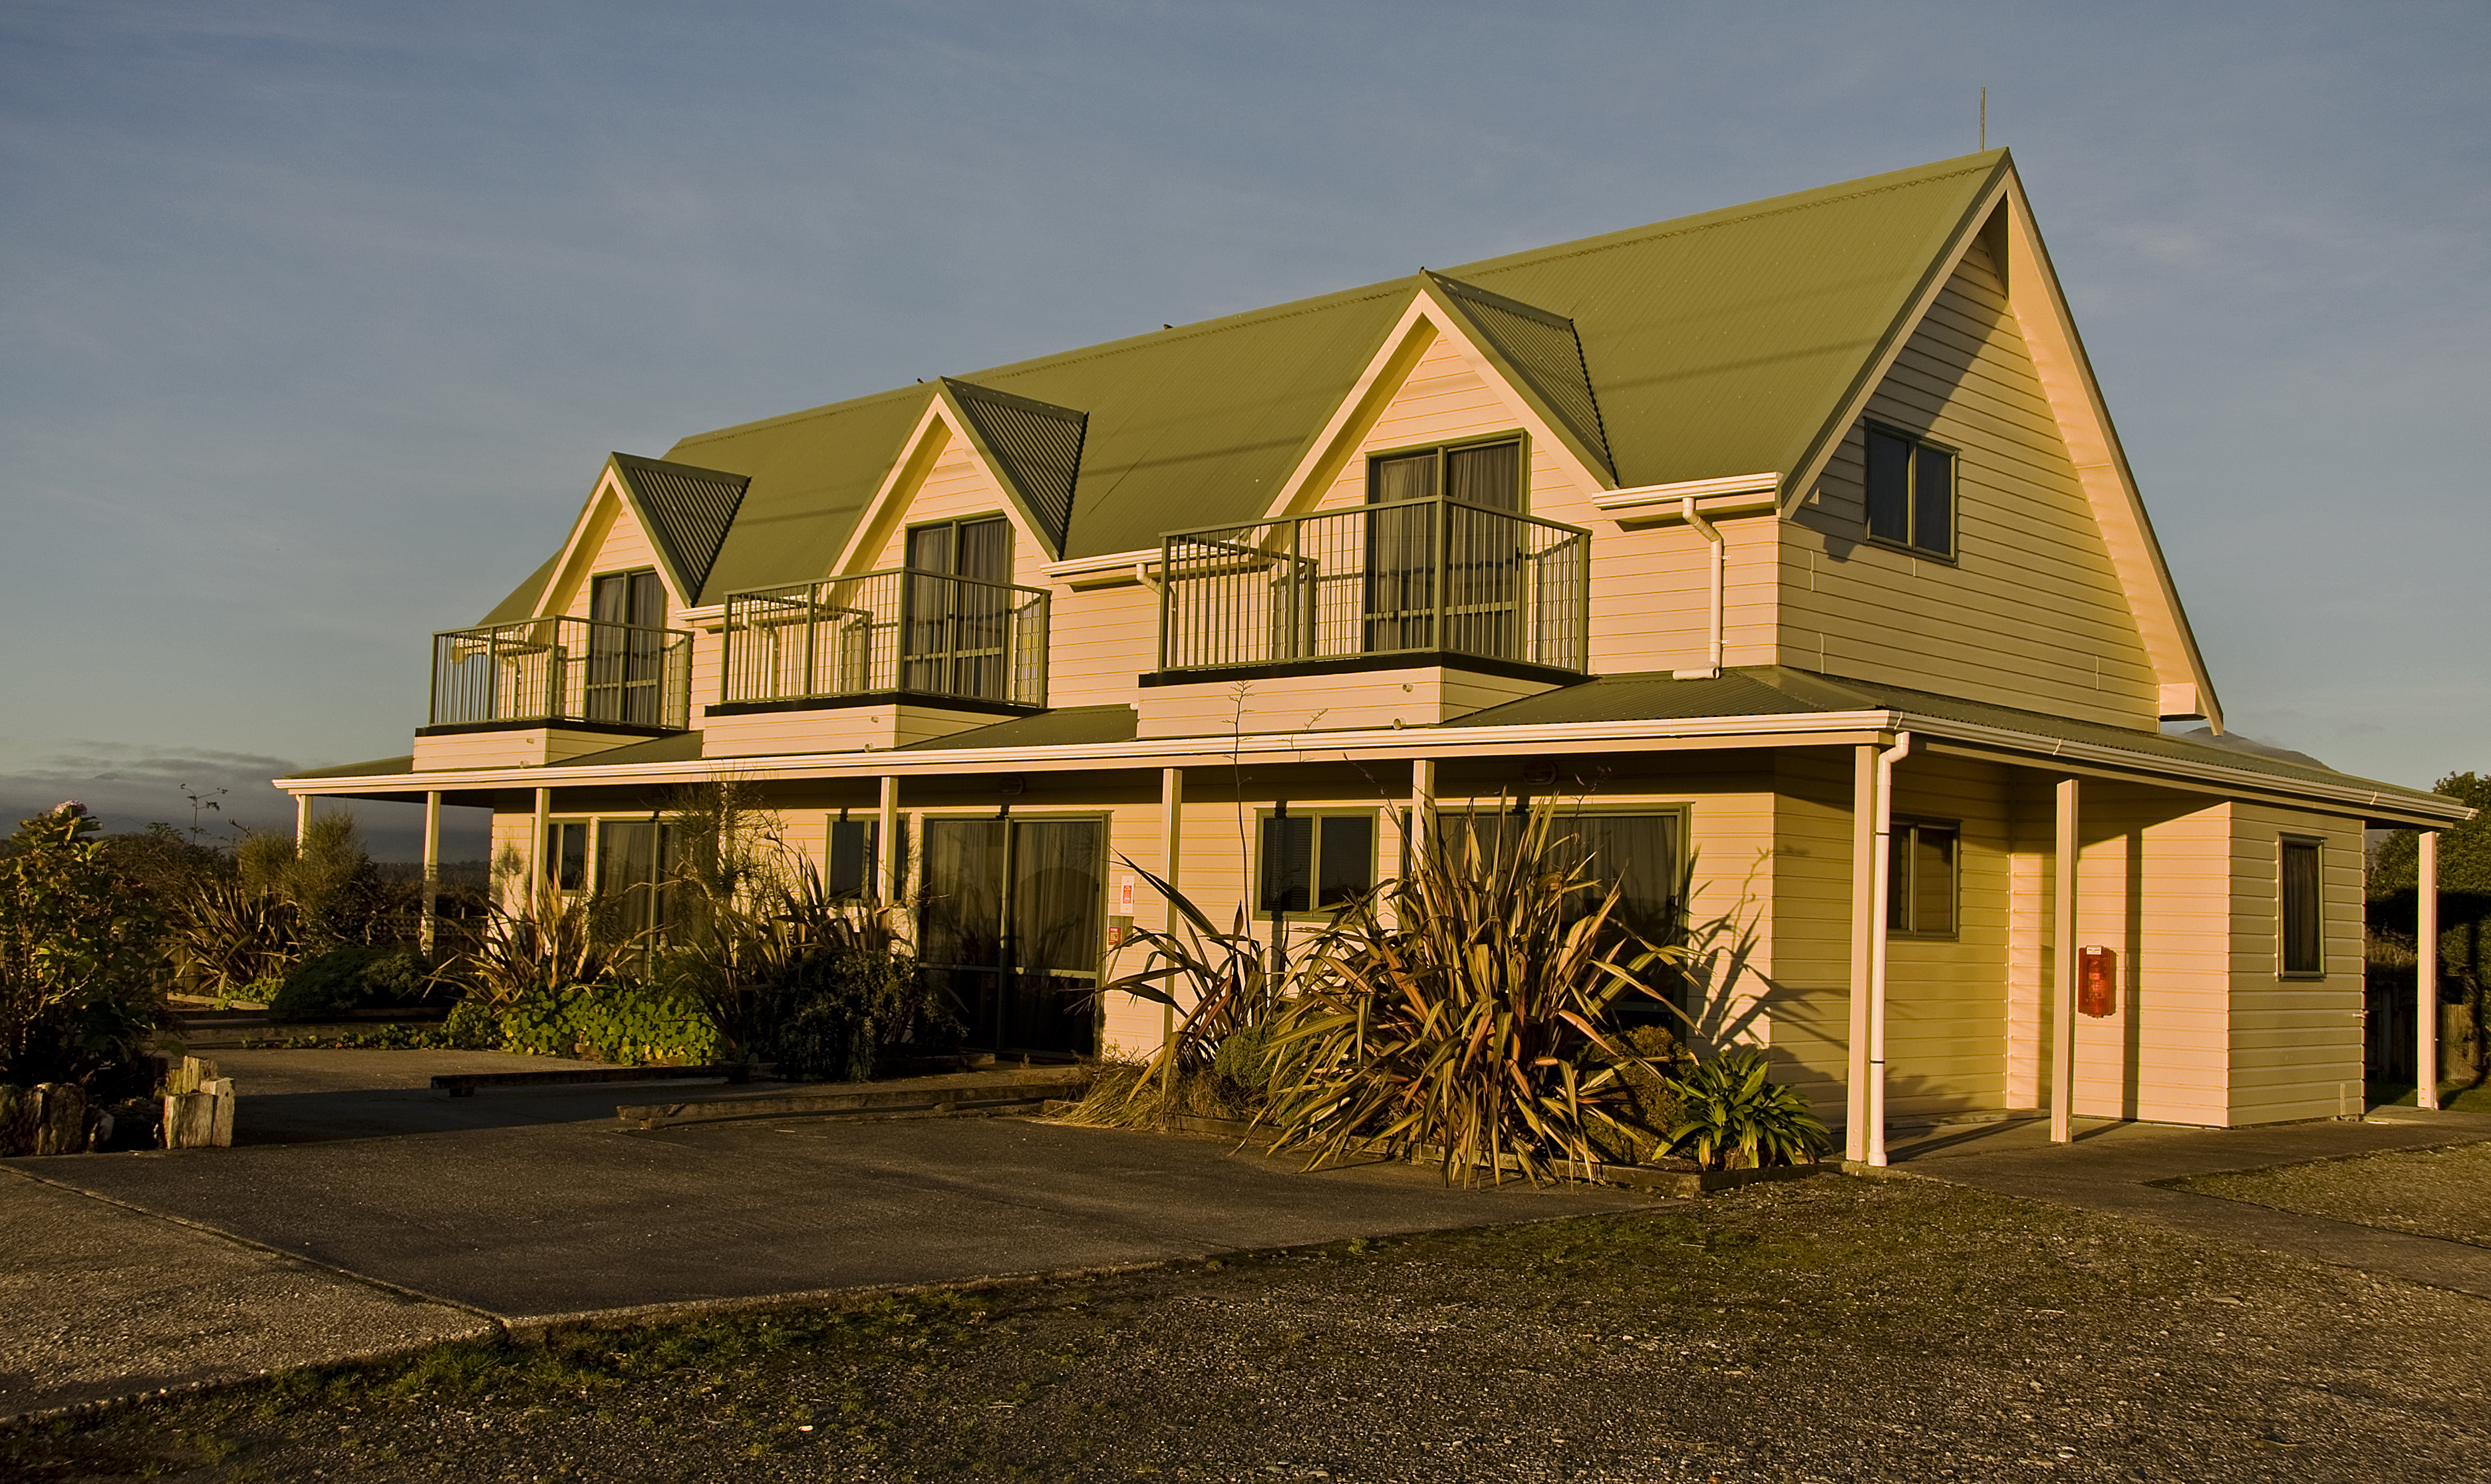 Haast Beach Motels 2 storey family apartments